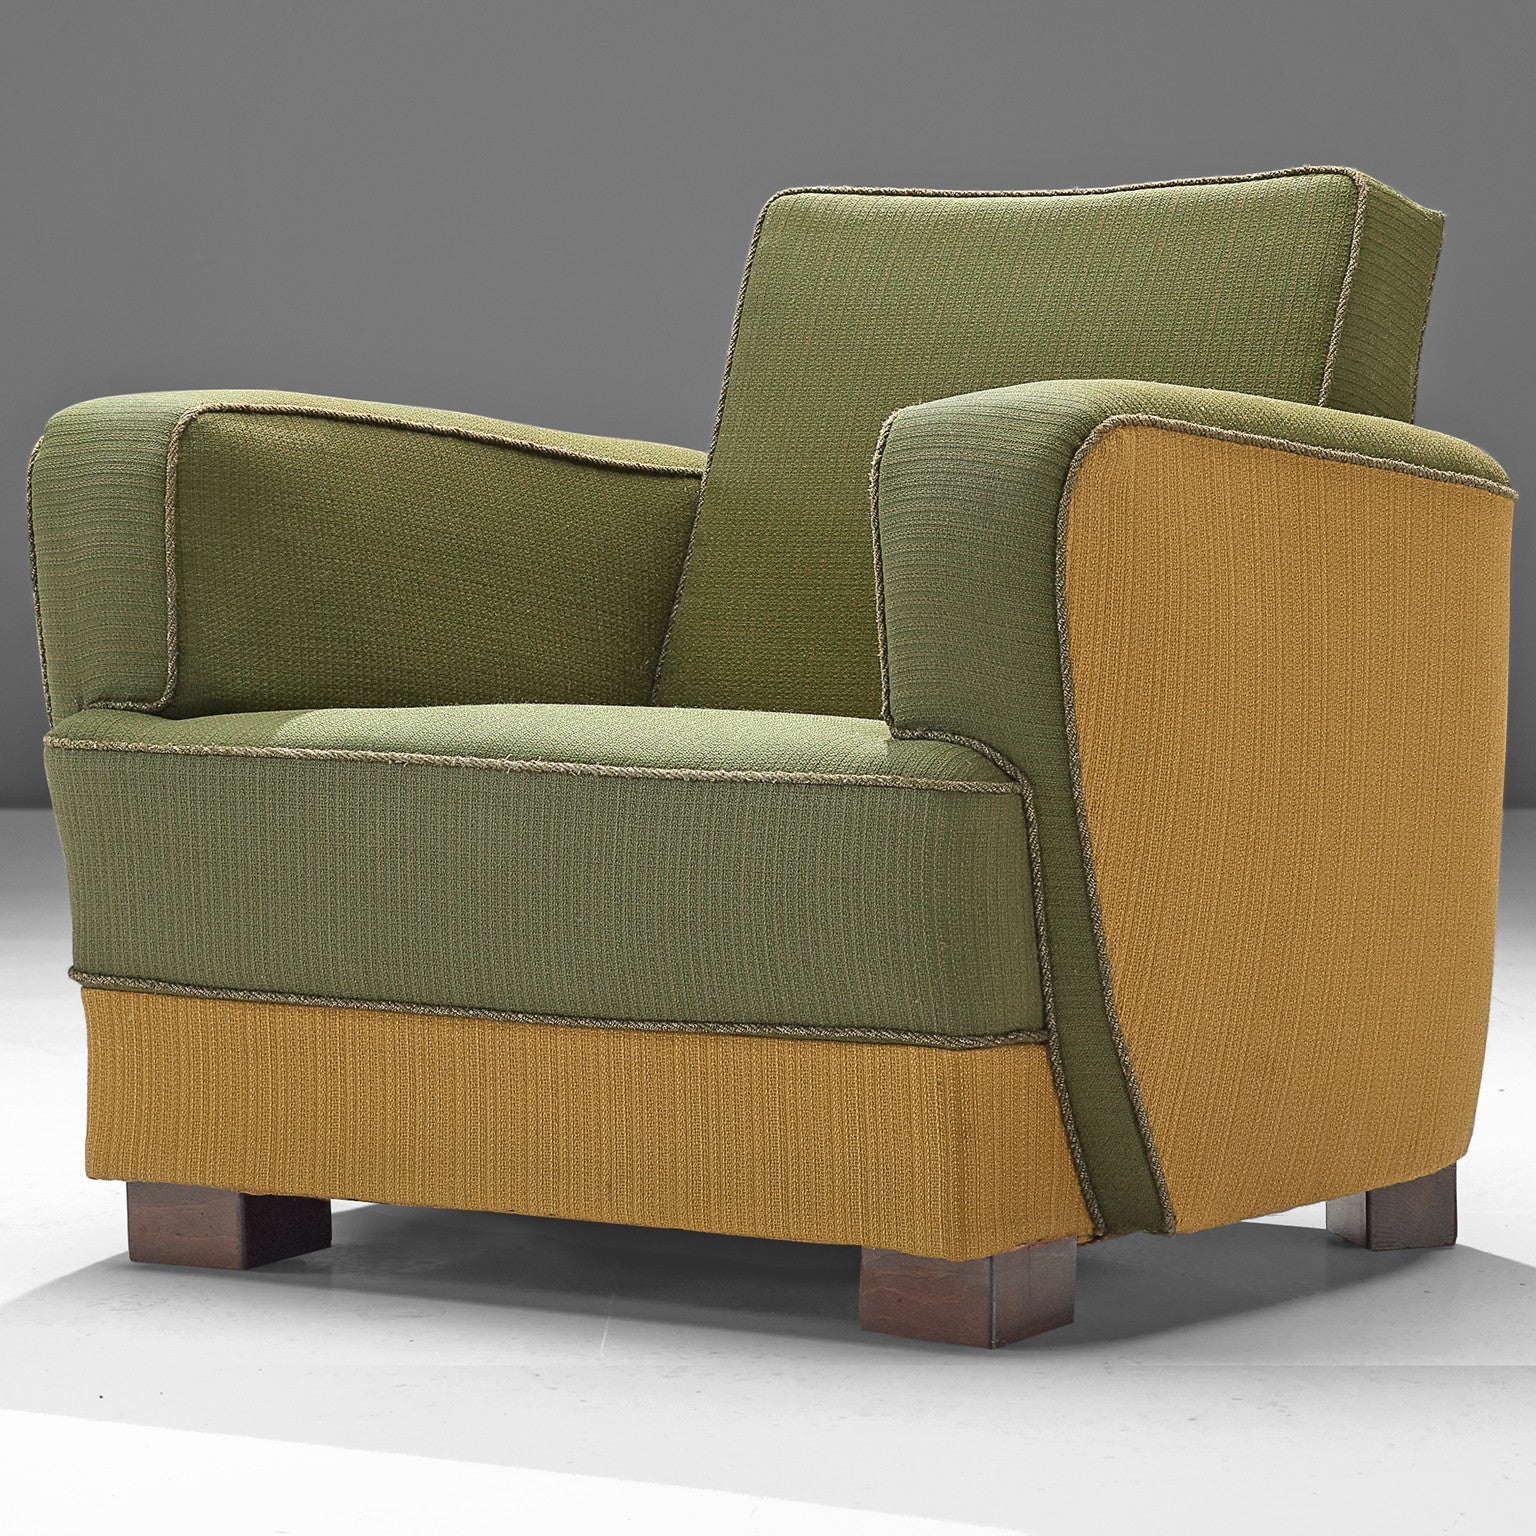 1930s Danish Cabinetmaker Easy Chair in Original Green Yellow Upholstery